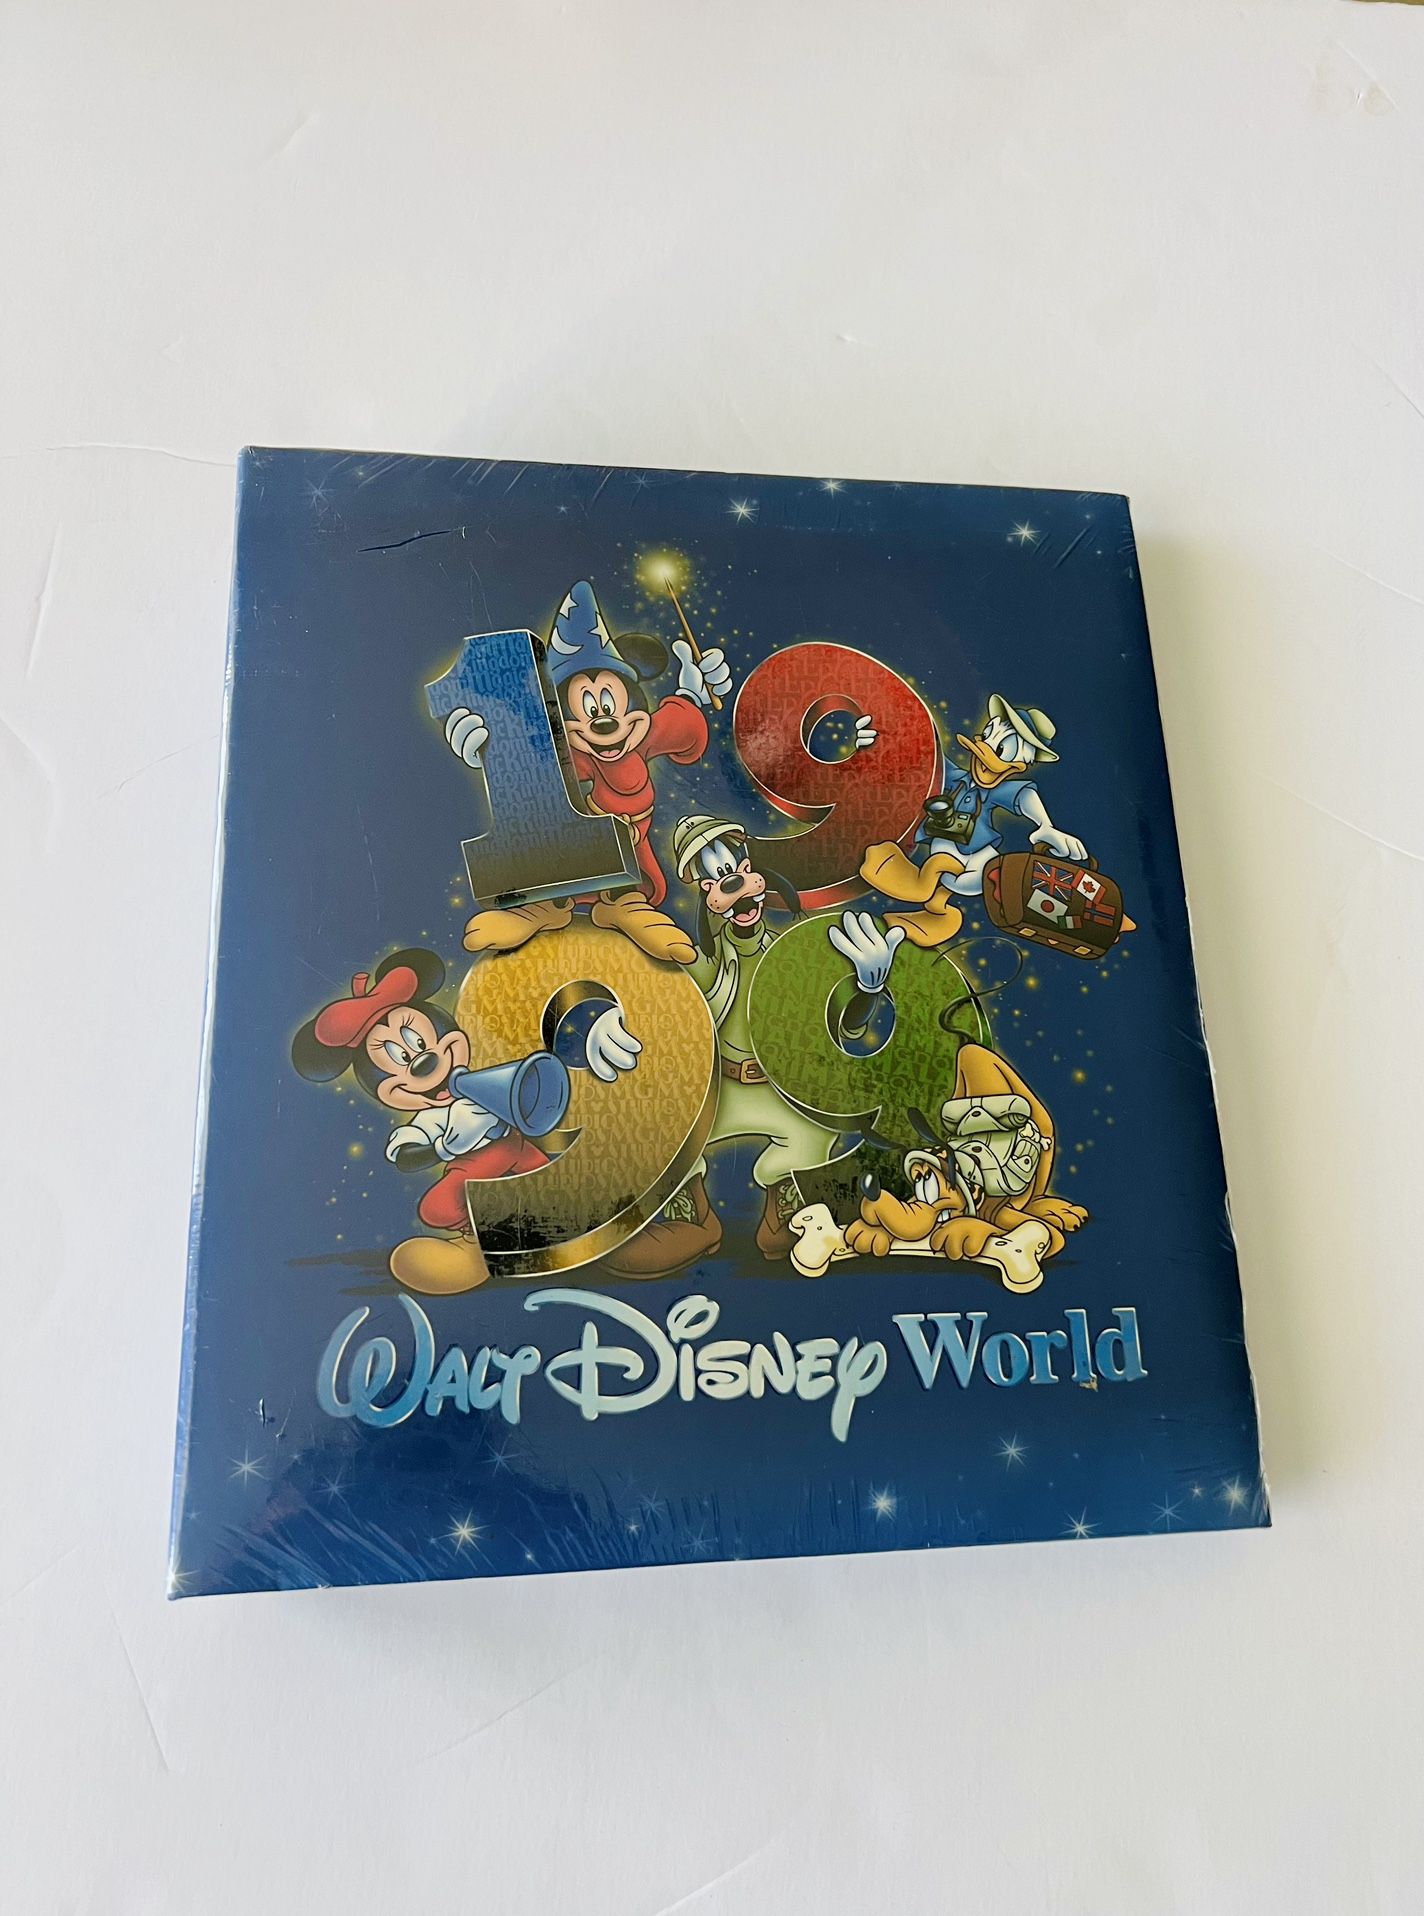 New 1999 Disney World Binder 